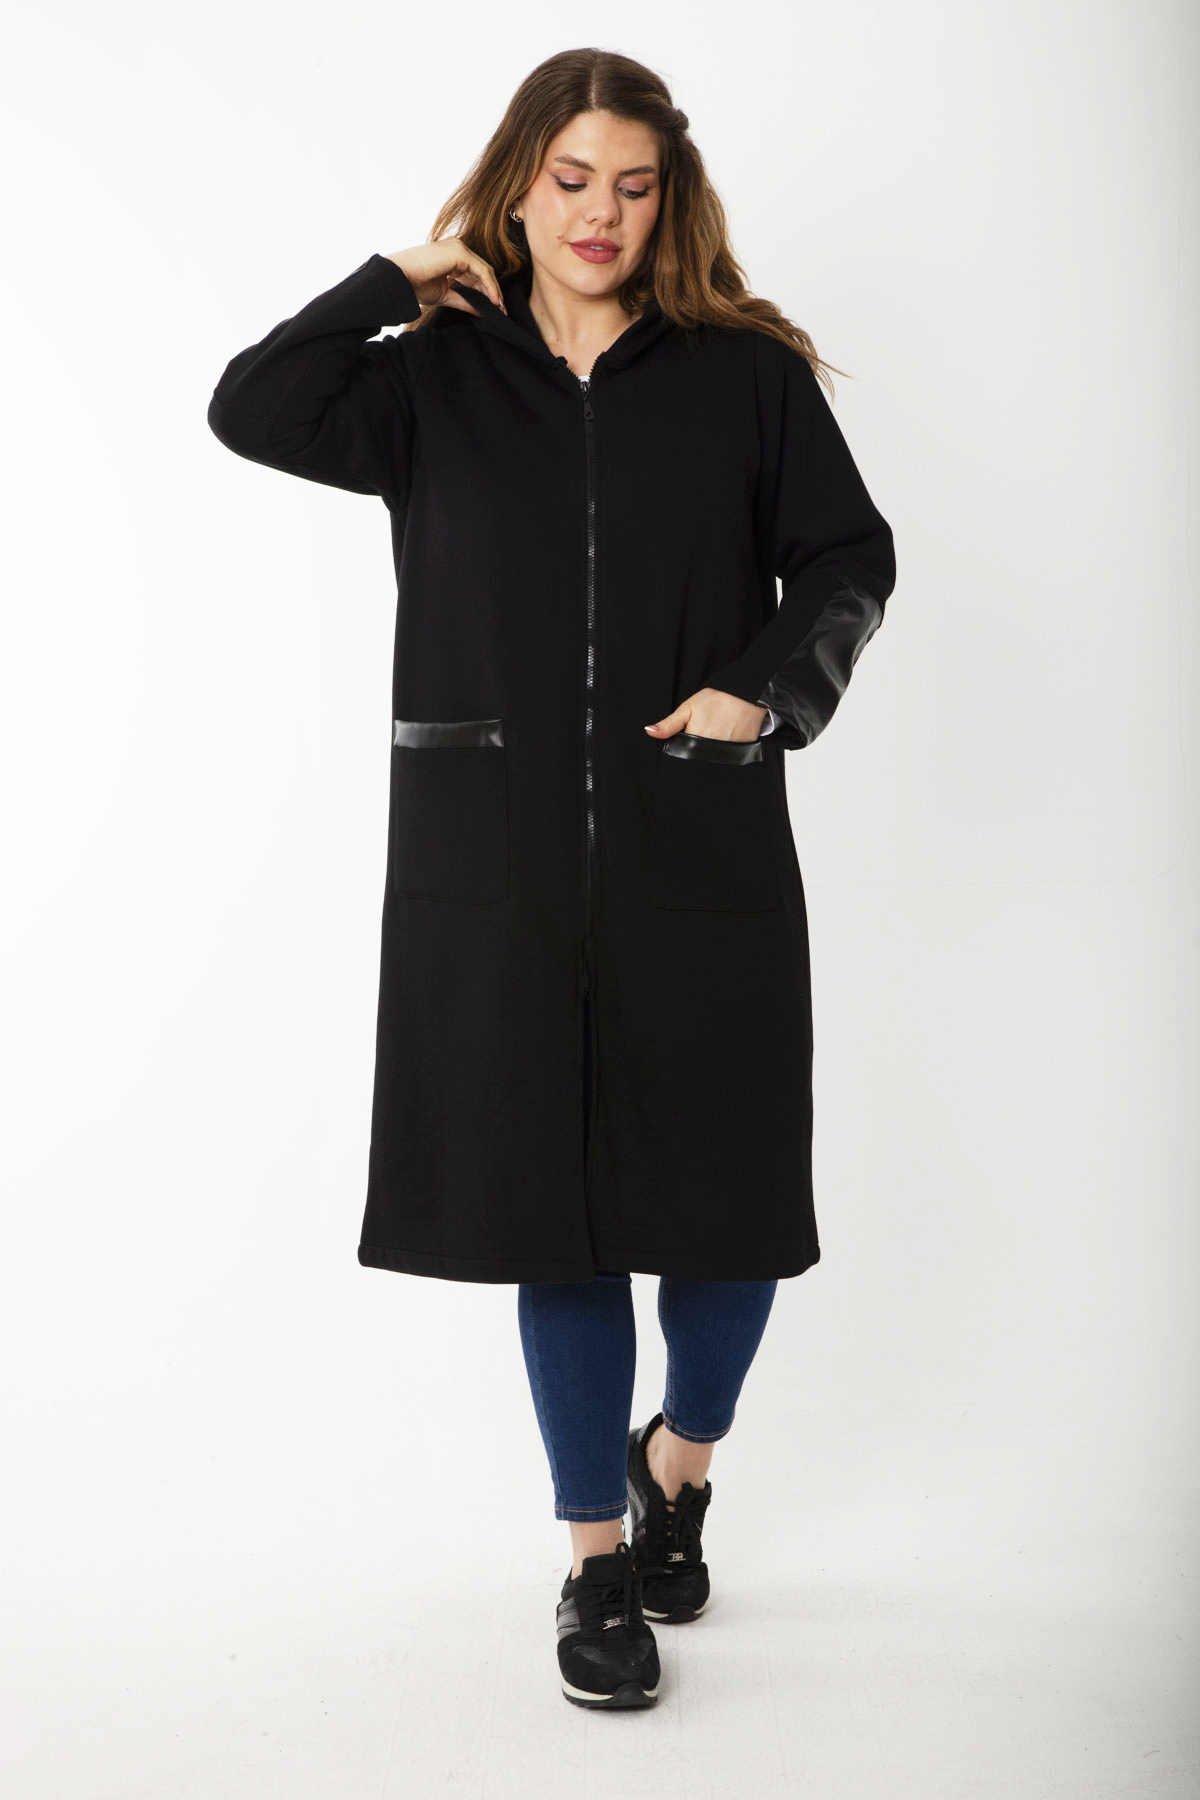 Şans Women's Large Size Black Front Zipper Hooded Unlined Faux Leather Coat